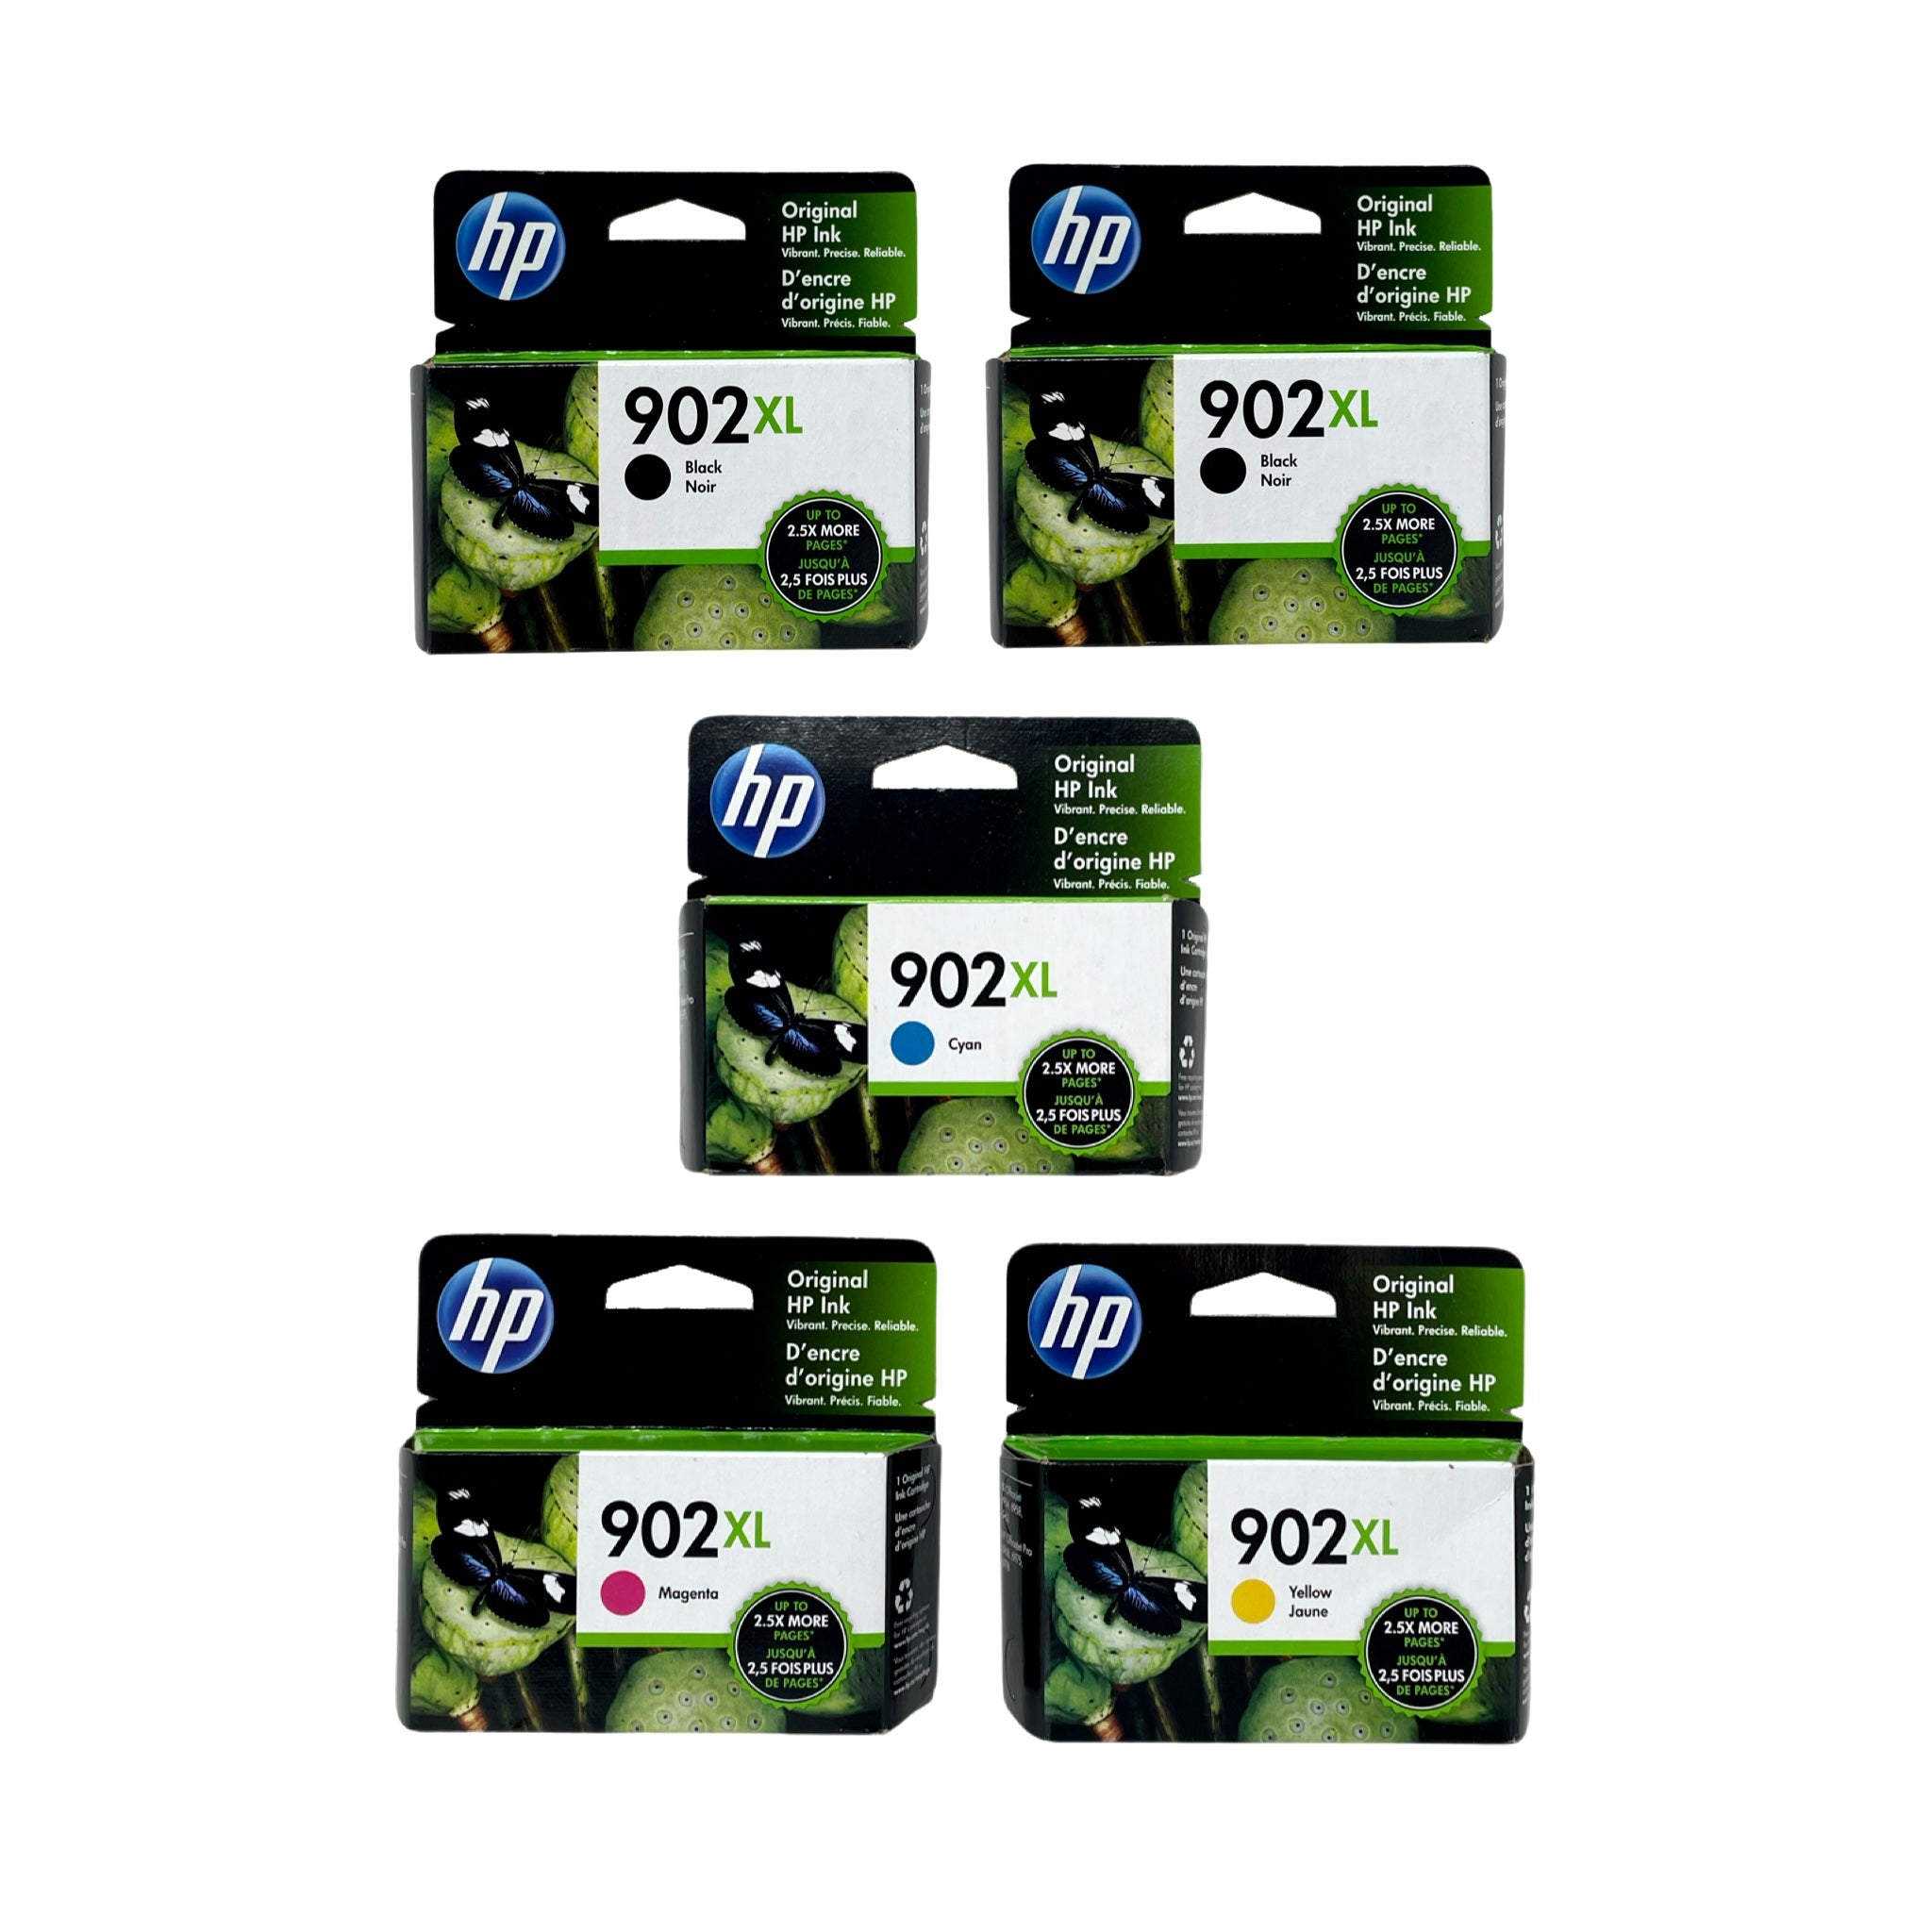 HP 902XL High Yield Ink 5 Pack - Black Cyan Magenta Yellow - Original HP Ink Cartridges (6ZA01AN